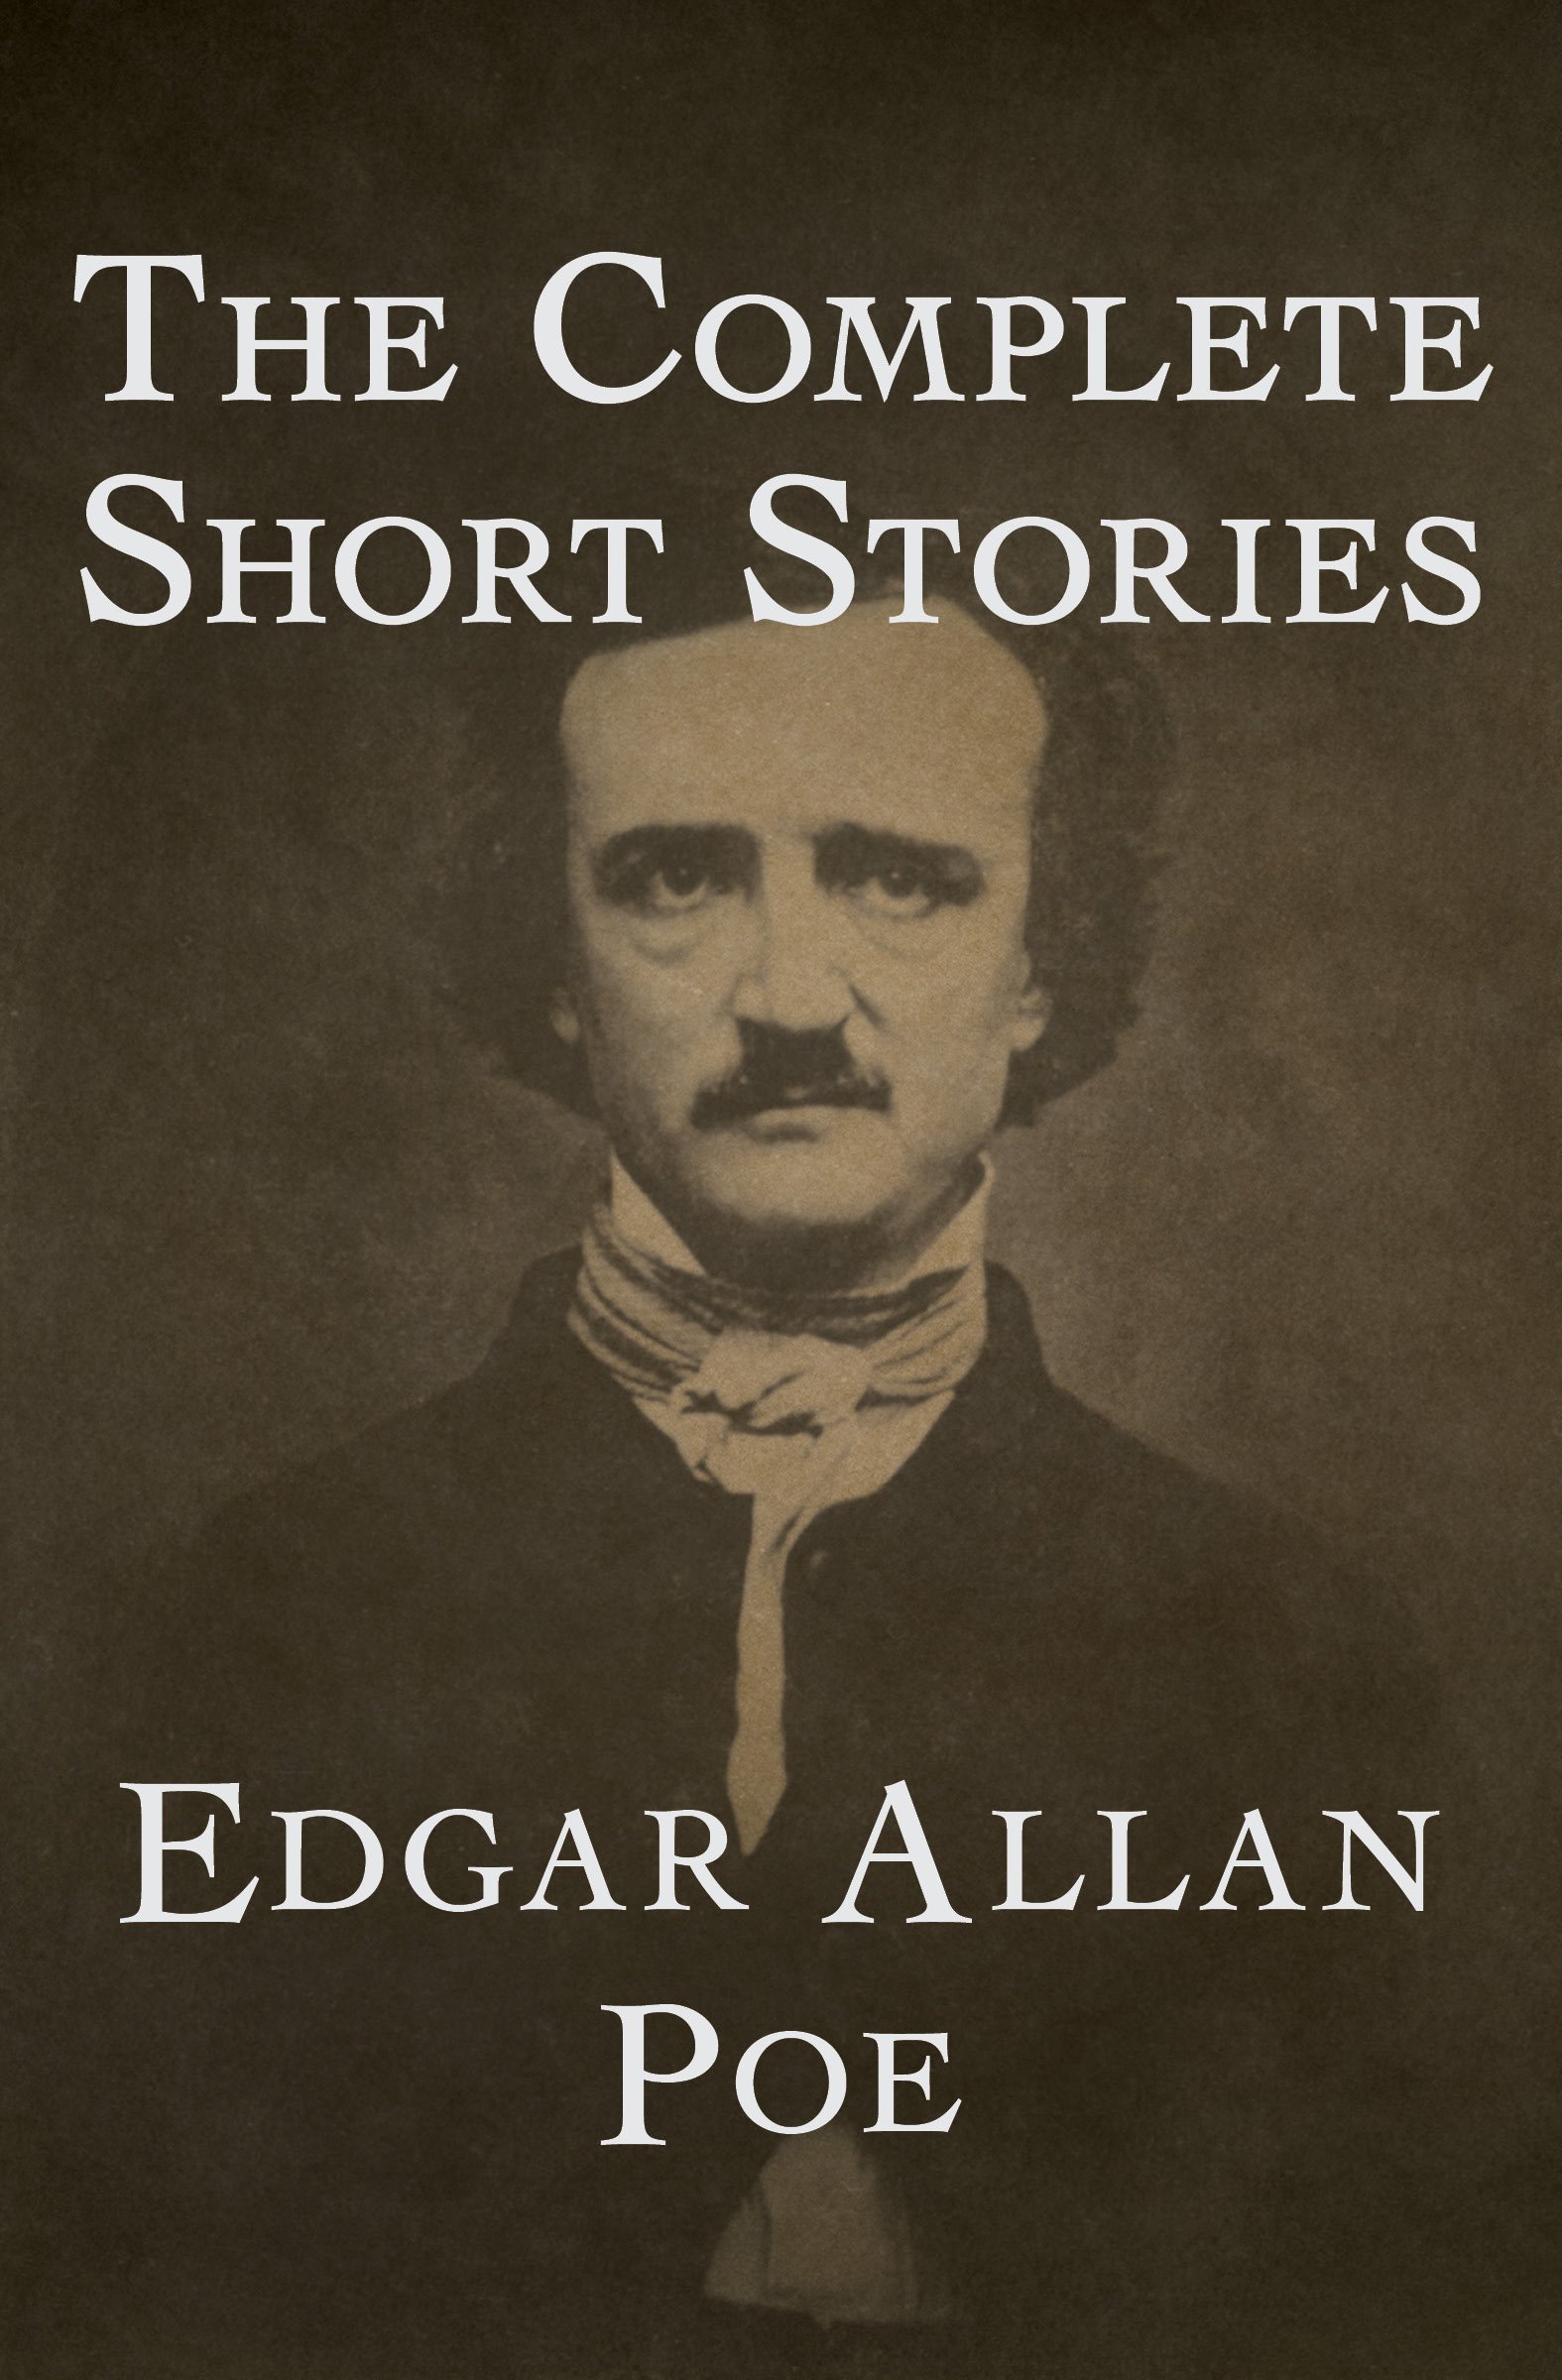 Stories by Edgar Allan Poe